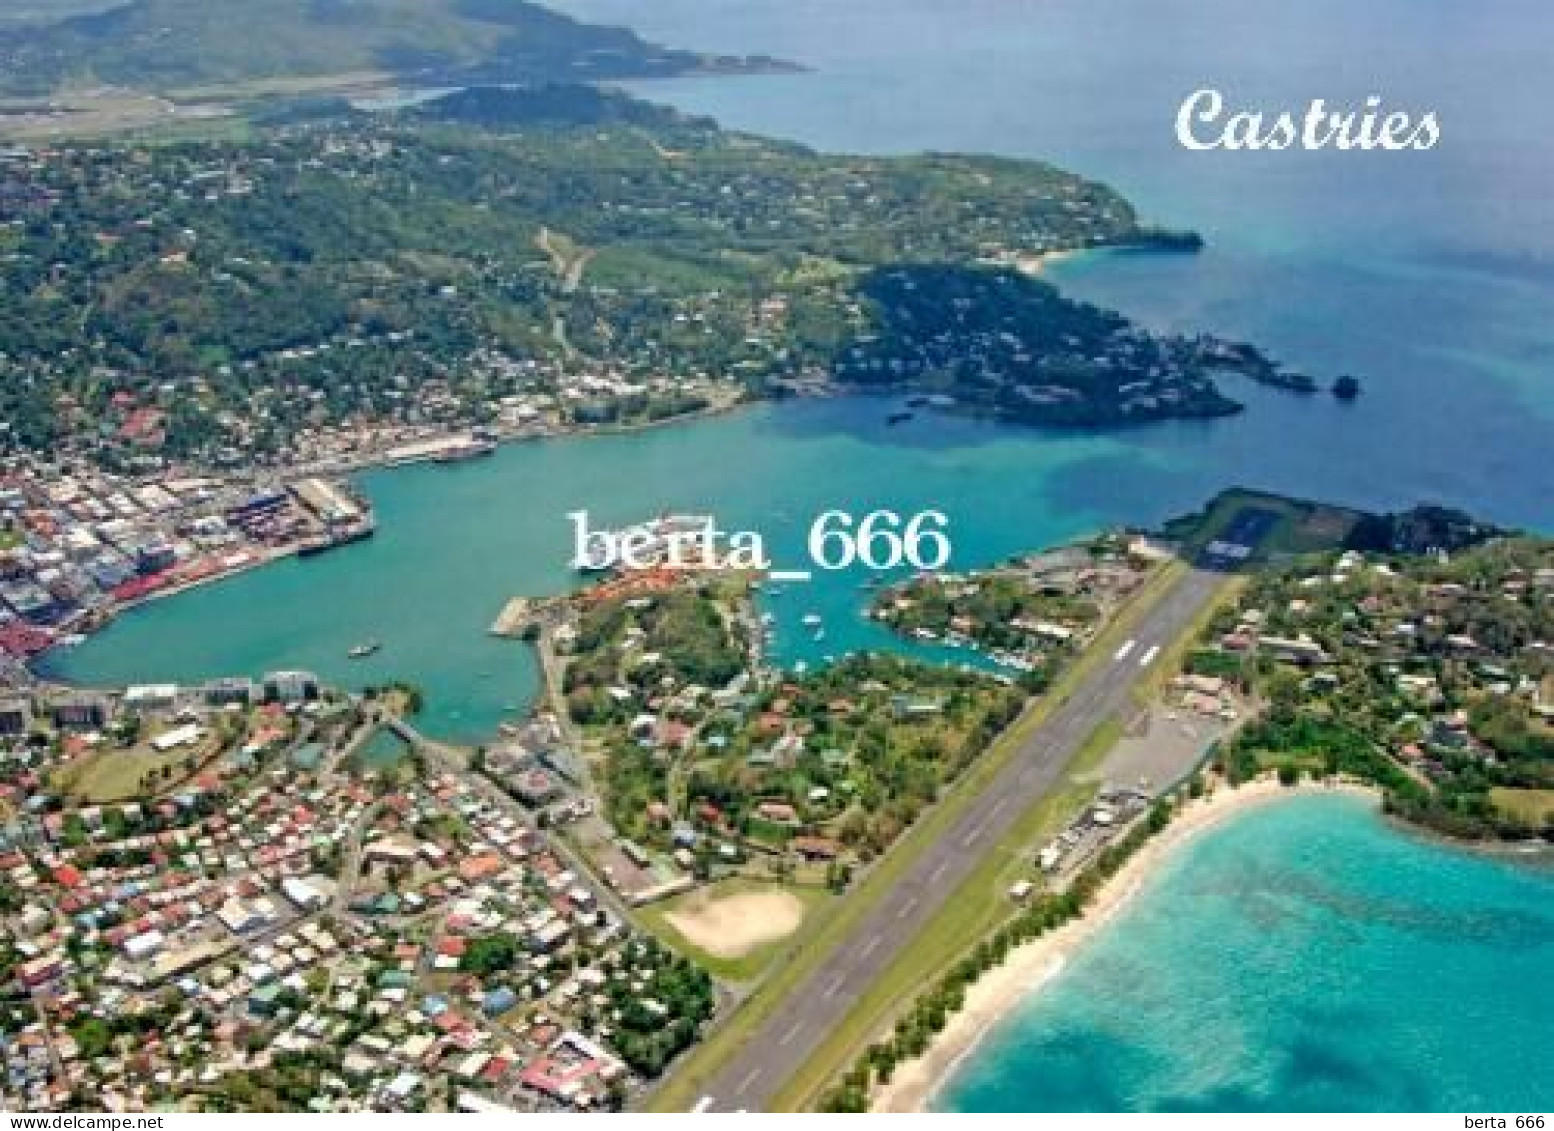 Saint Lucia Island Castries Aerial View Runway New Postcard - Santa Lucía